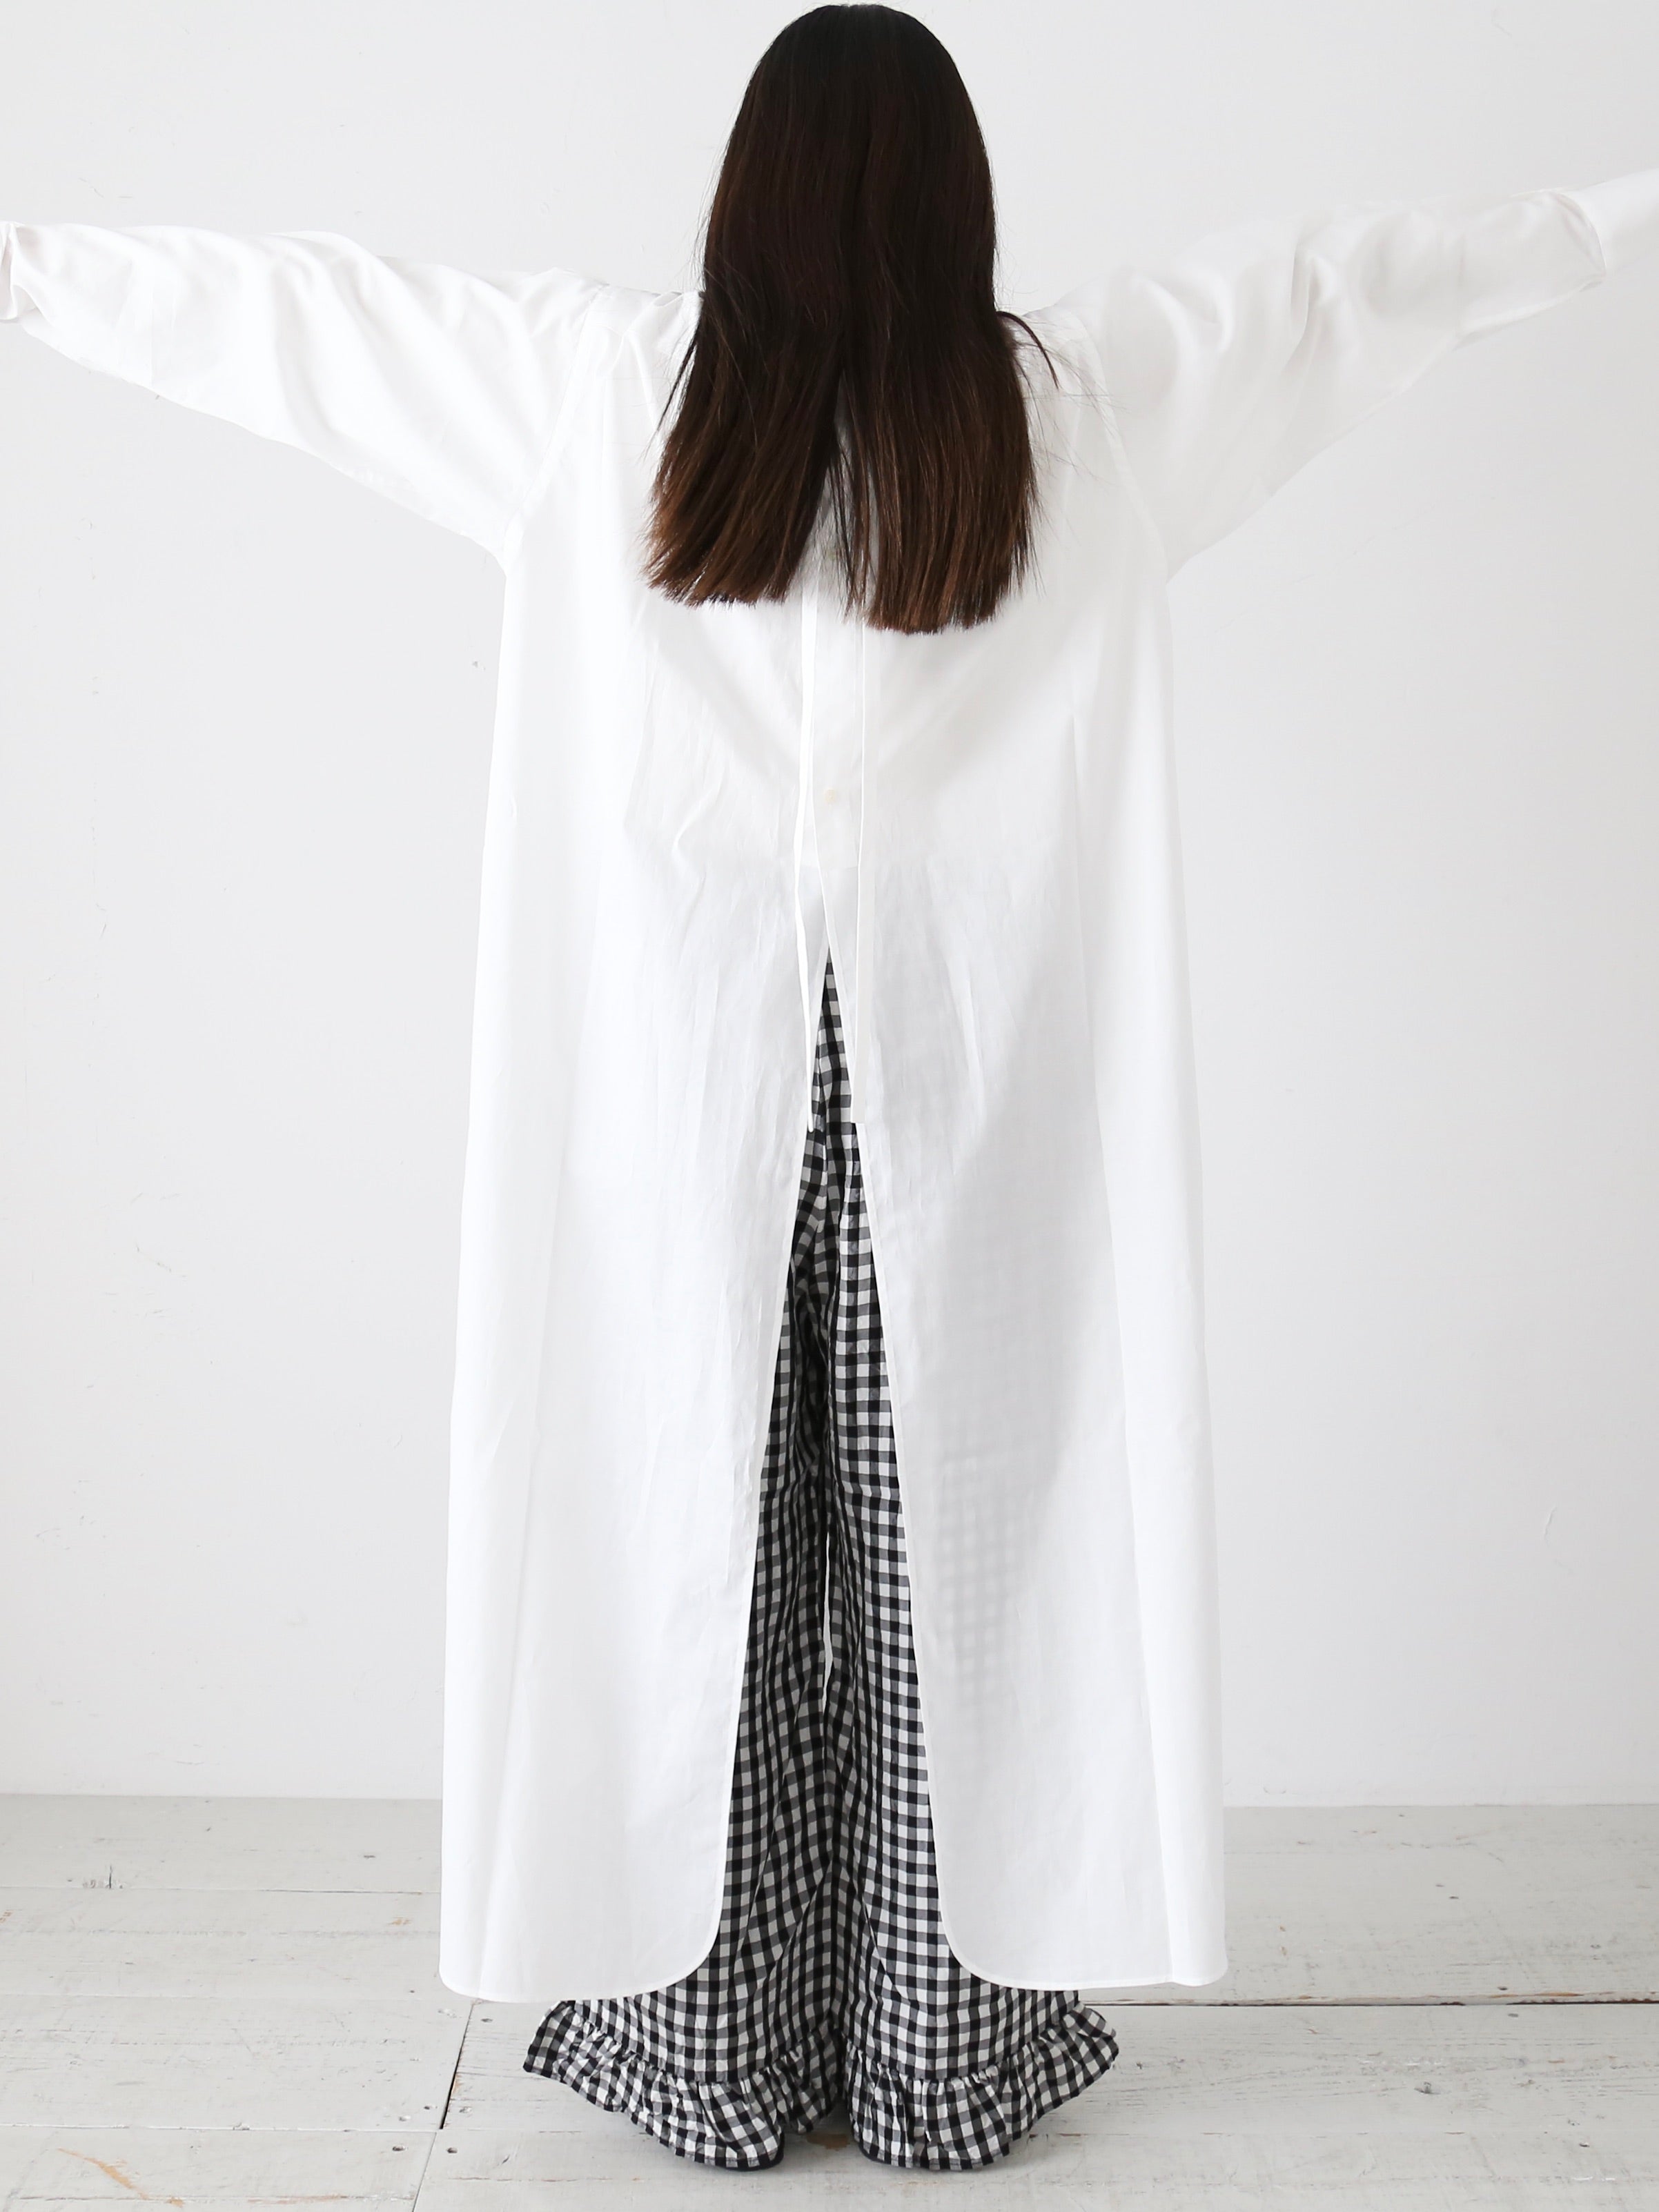 ayanoguchiaya ドレスシャツロング [dress.45]